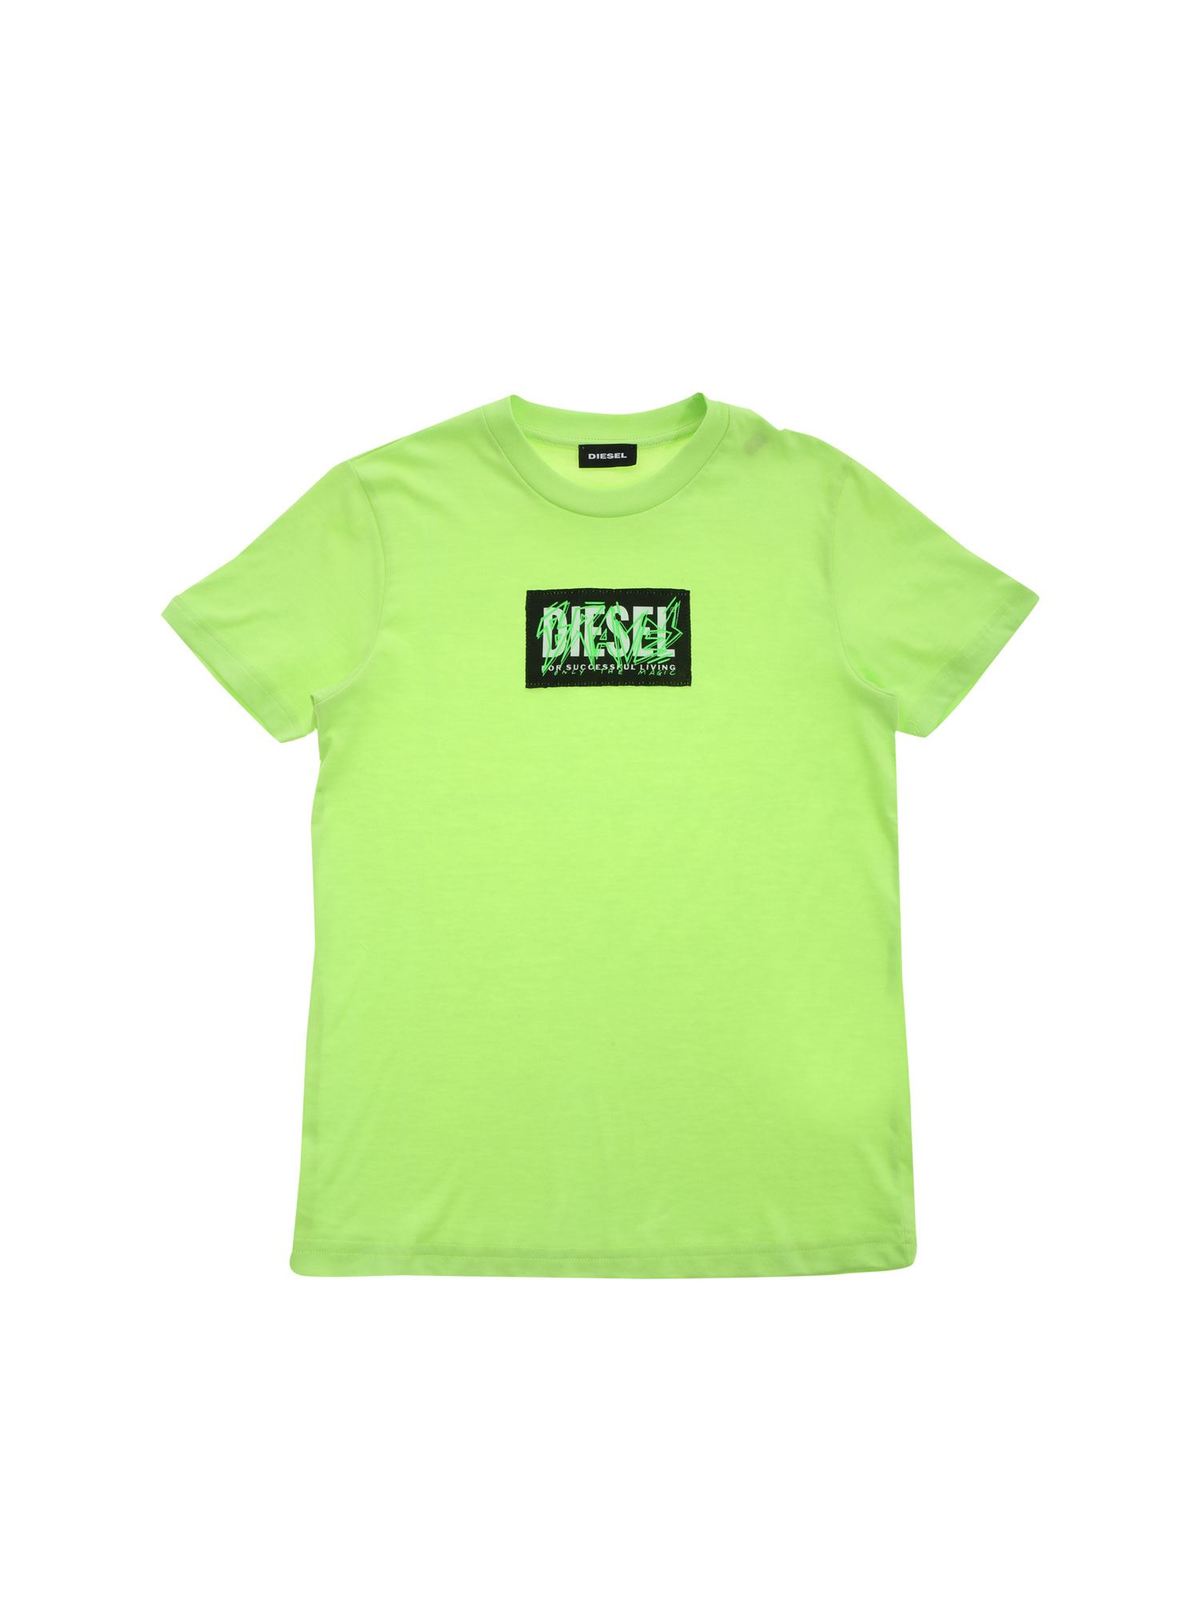 DIESEL T-JUST T-SHIRT IN GREEN